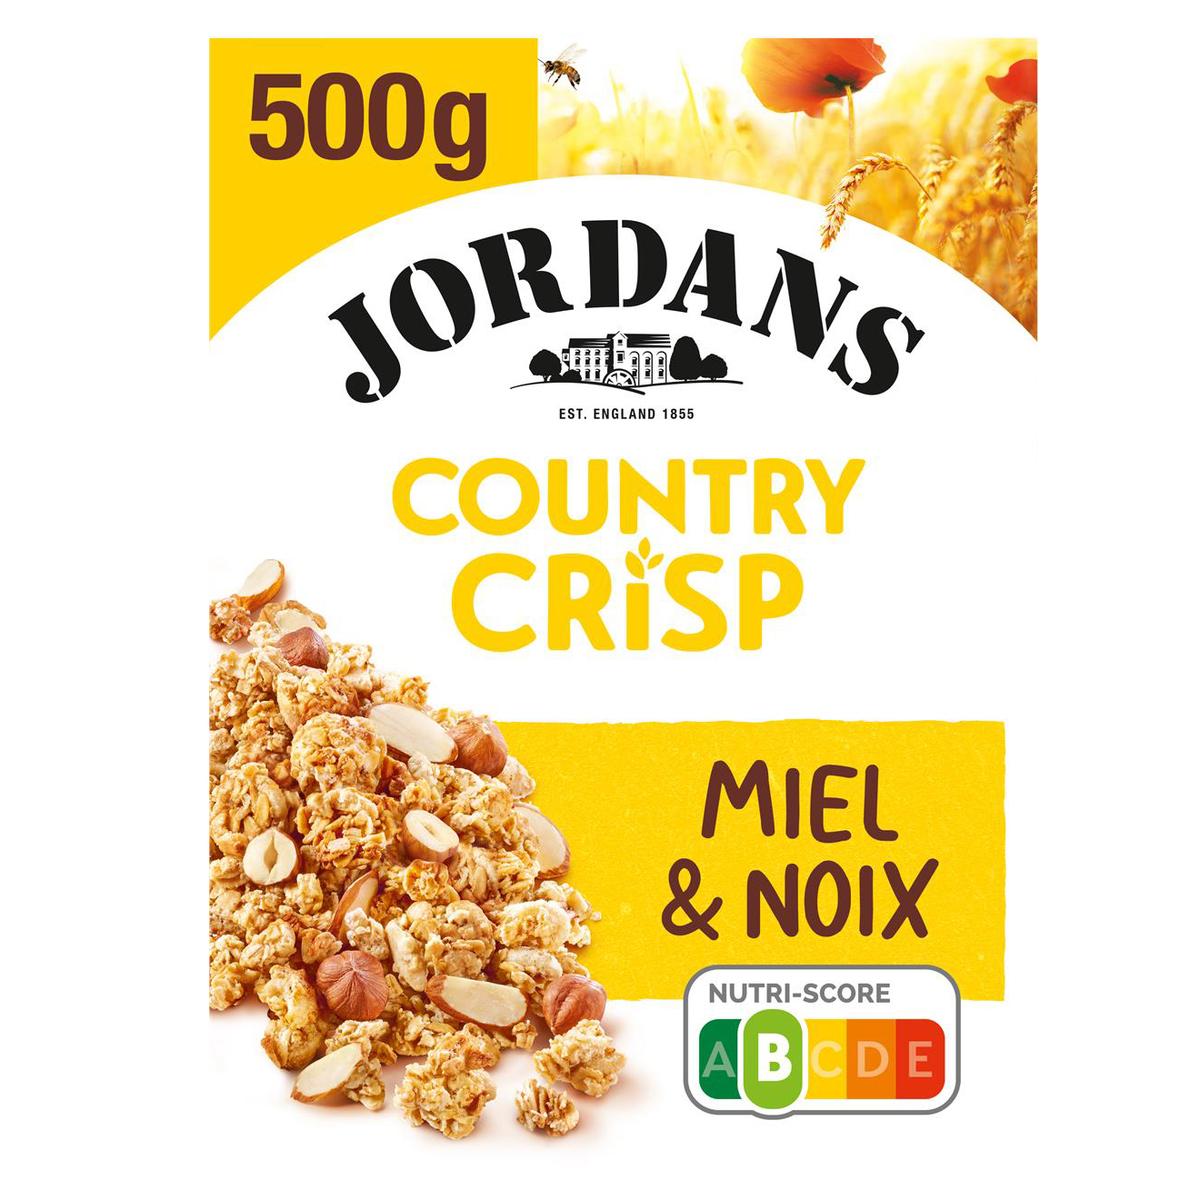 Country Crisp 4 baies • Jordans